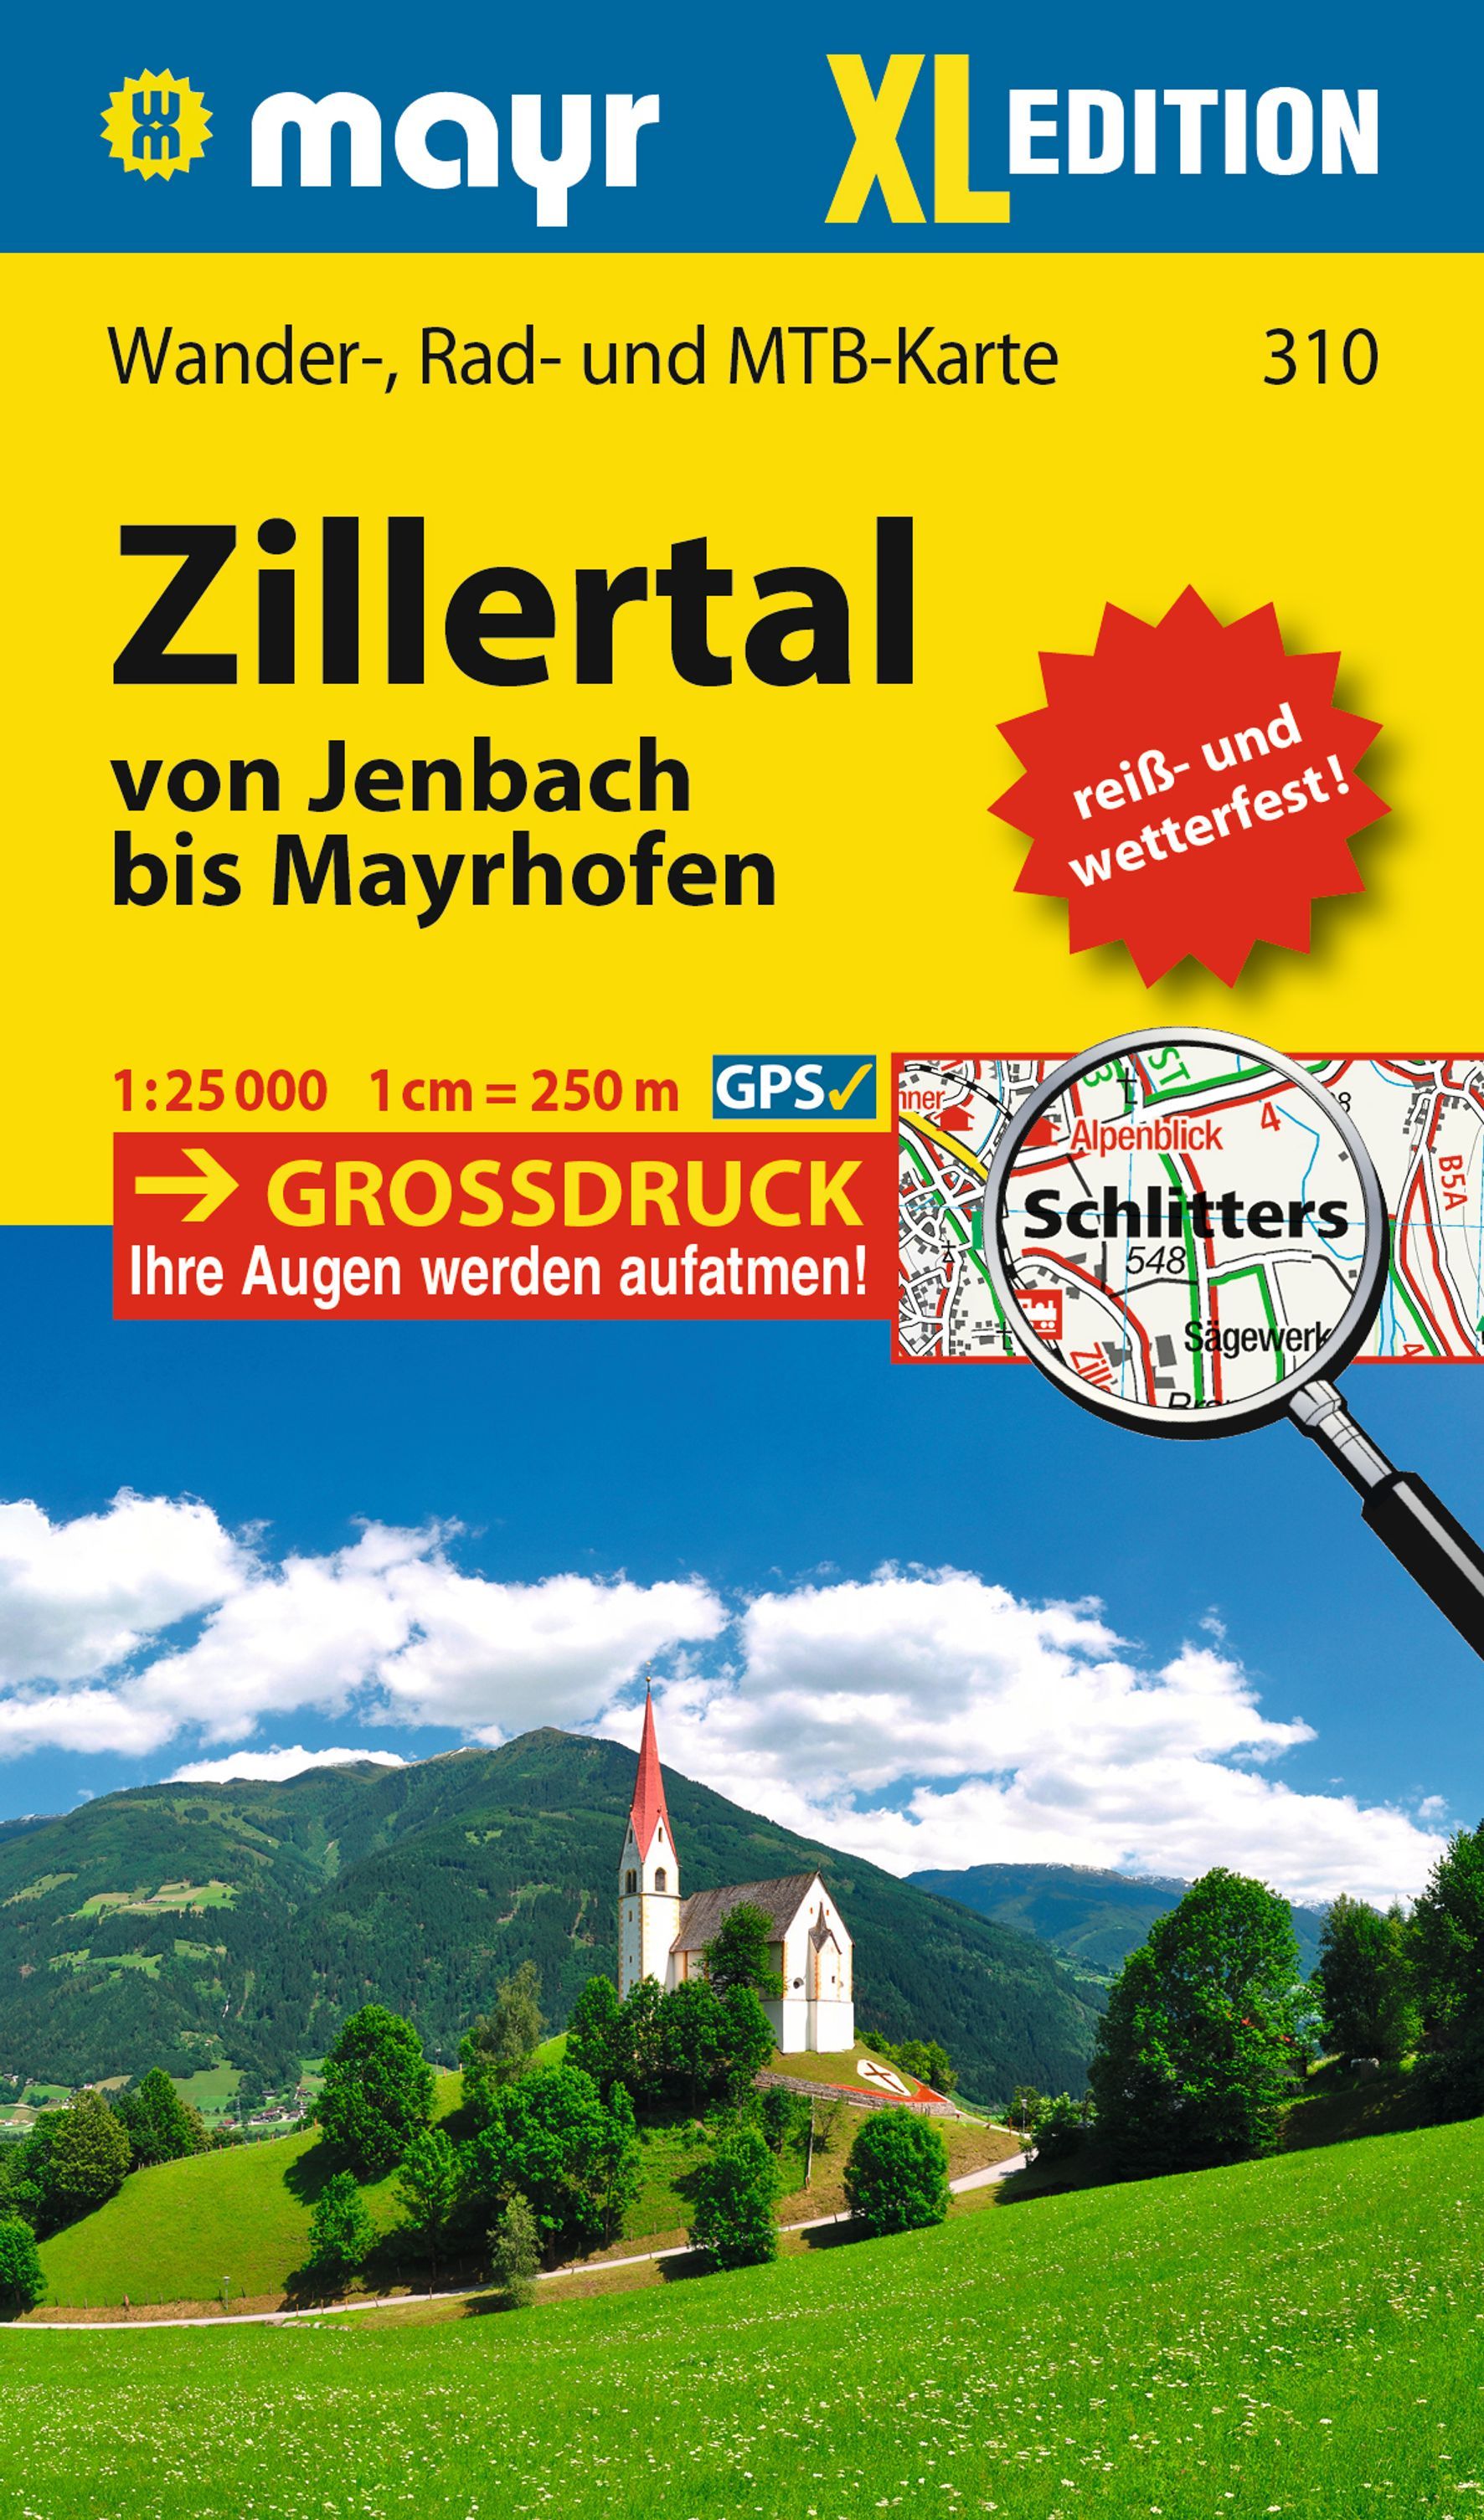 Online bestellen: Wandelkaart 310 XL Zillertal | Mayr